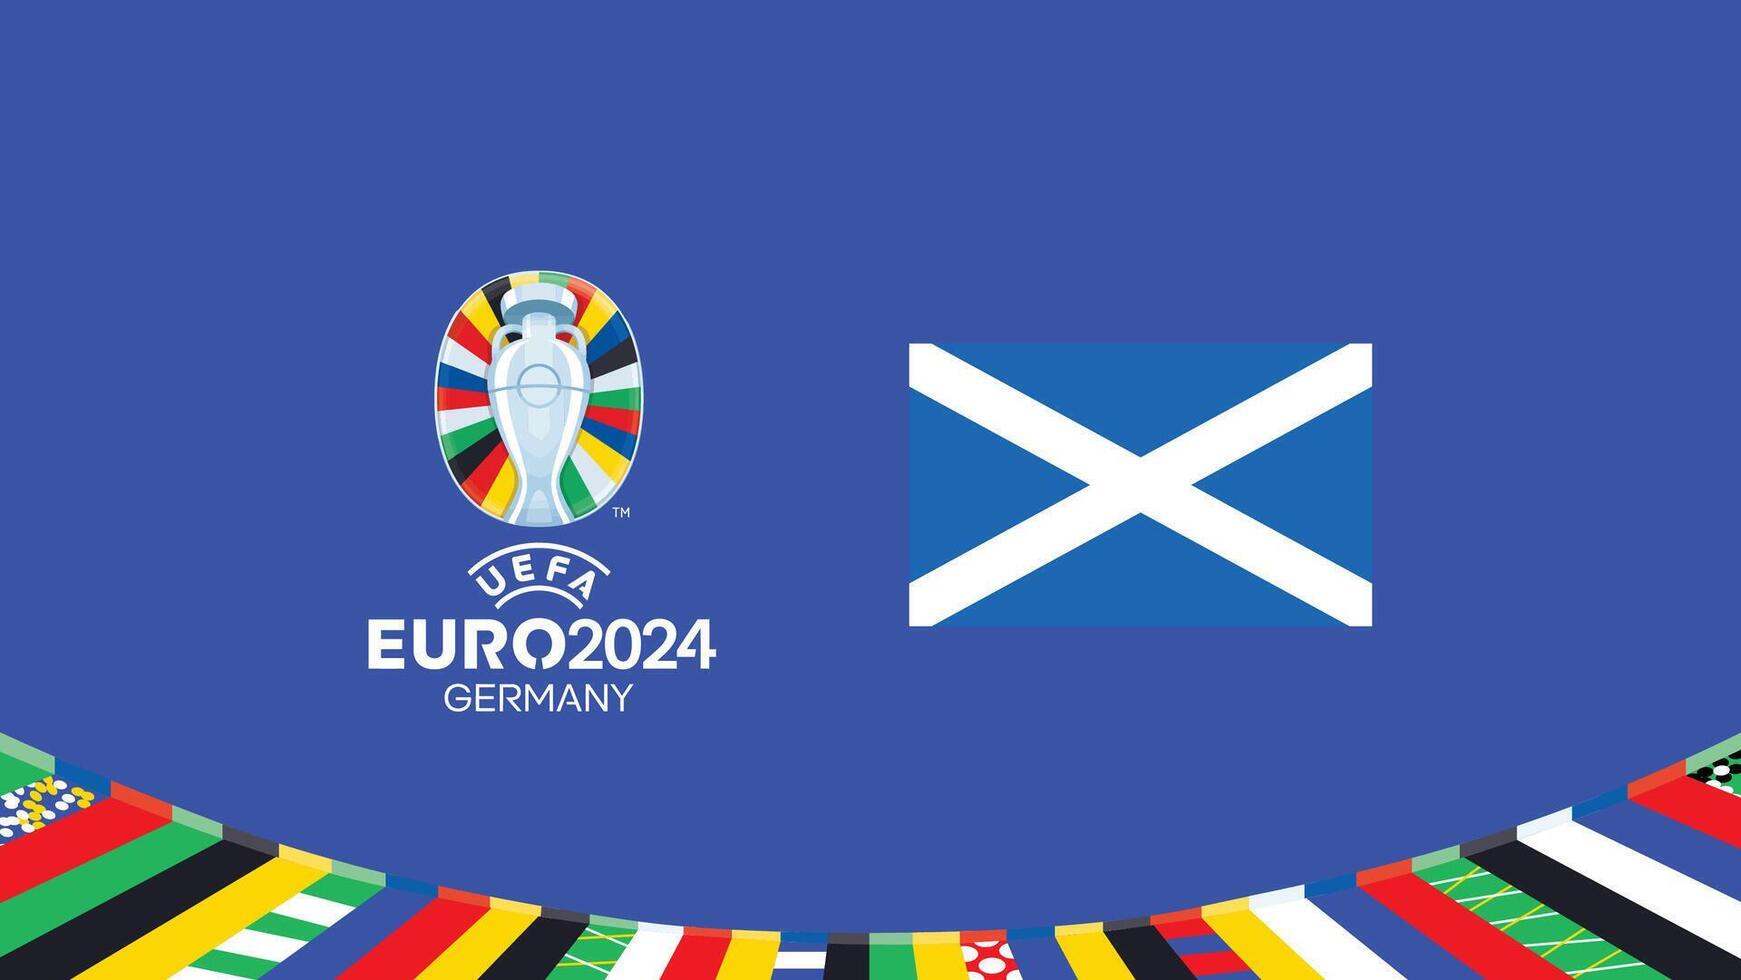 Euro 2024 Scotland Flag Emblem Teams Design With Official Symbol Logo Abstract Countries European Football Illustration vector